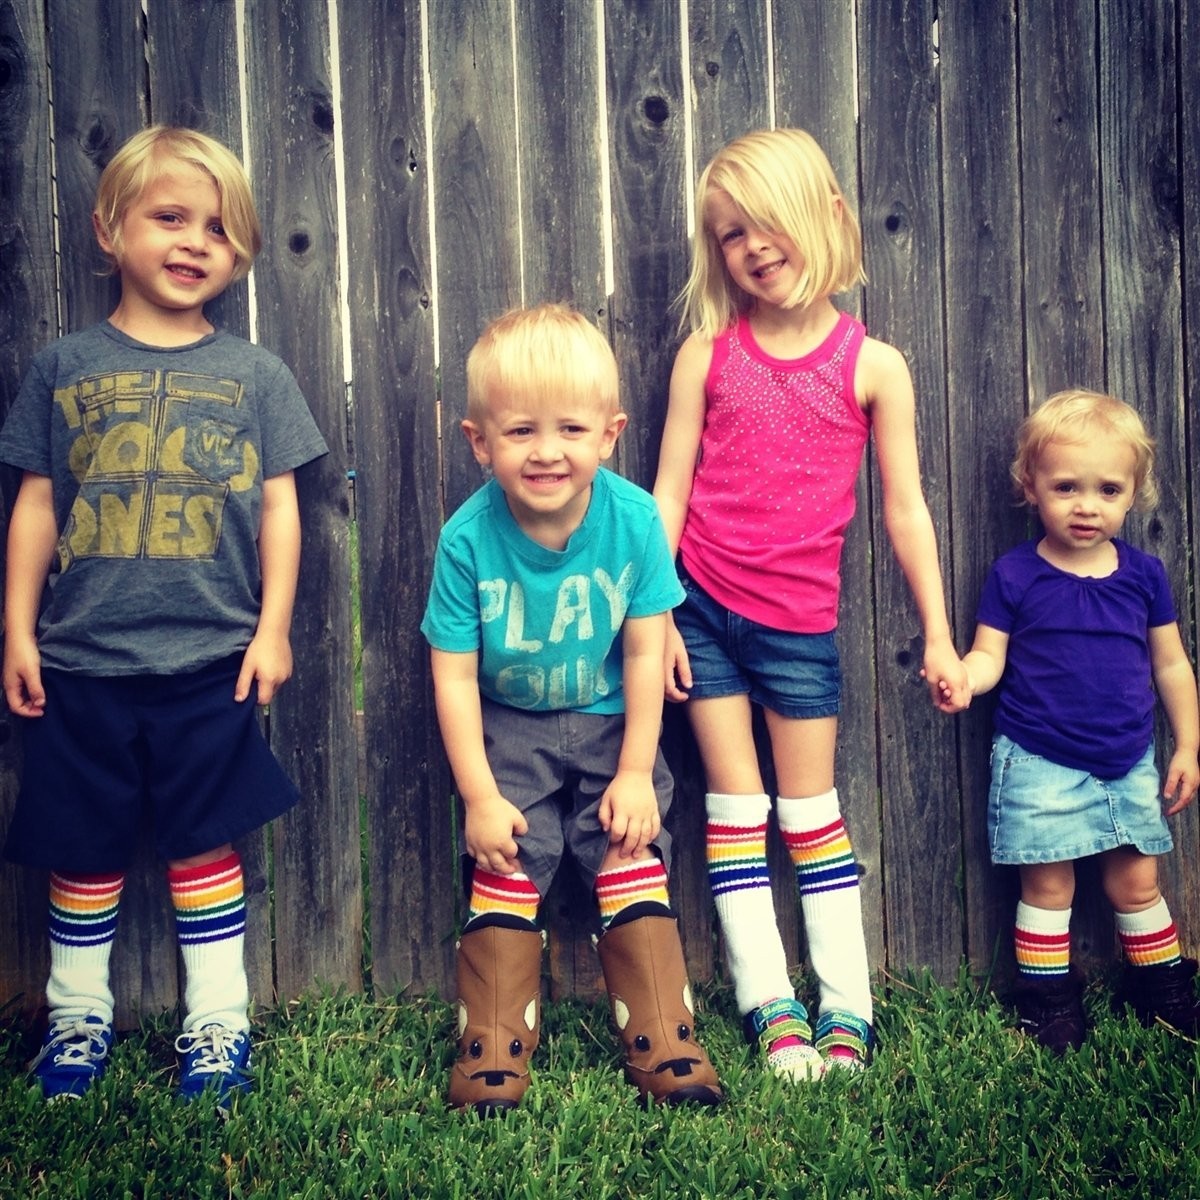 SkaterSocks baby Kids длинный носки носки младенец Kids White tube socks with Neon Green stripes style 1 (10 дюймовый )